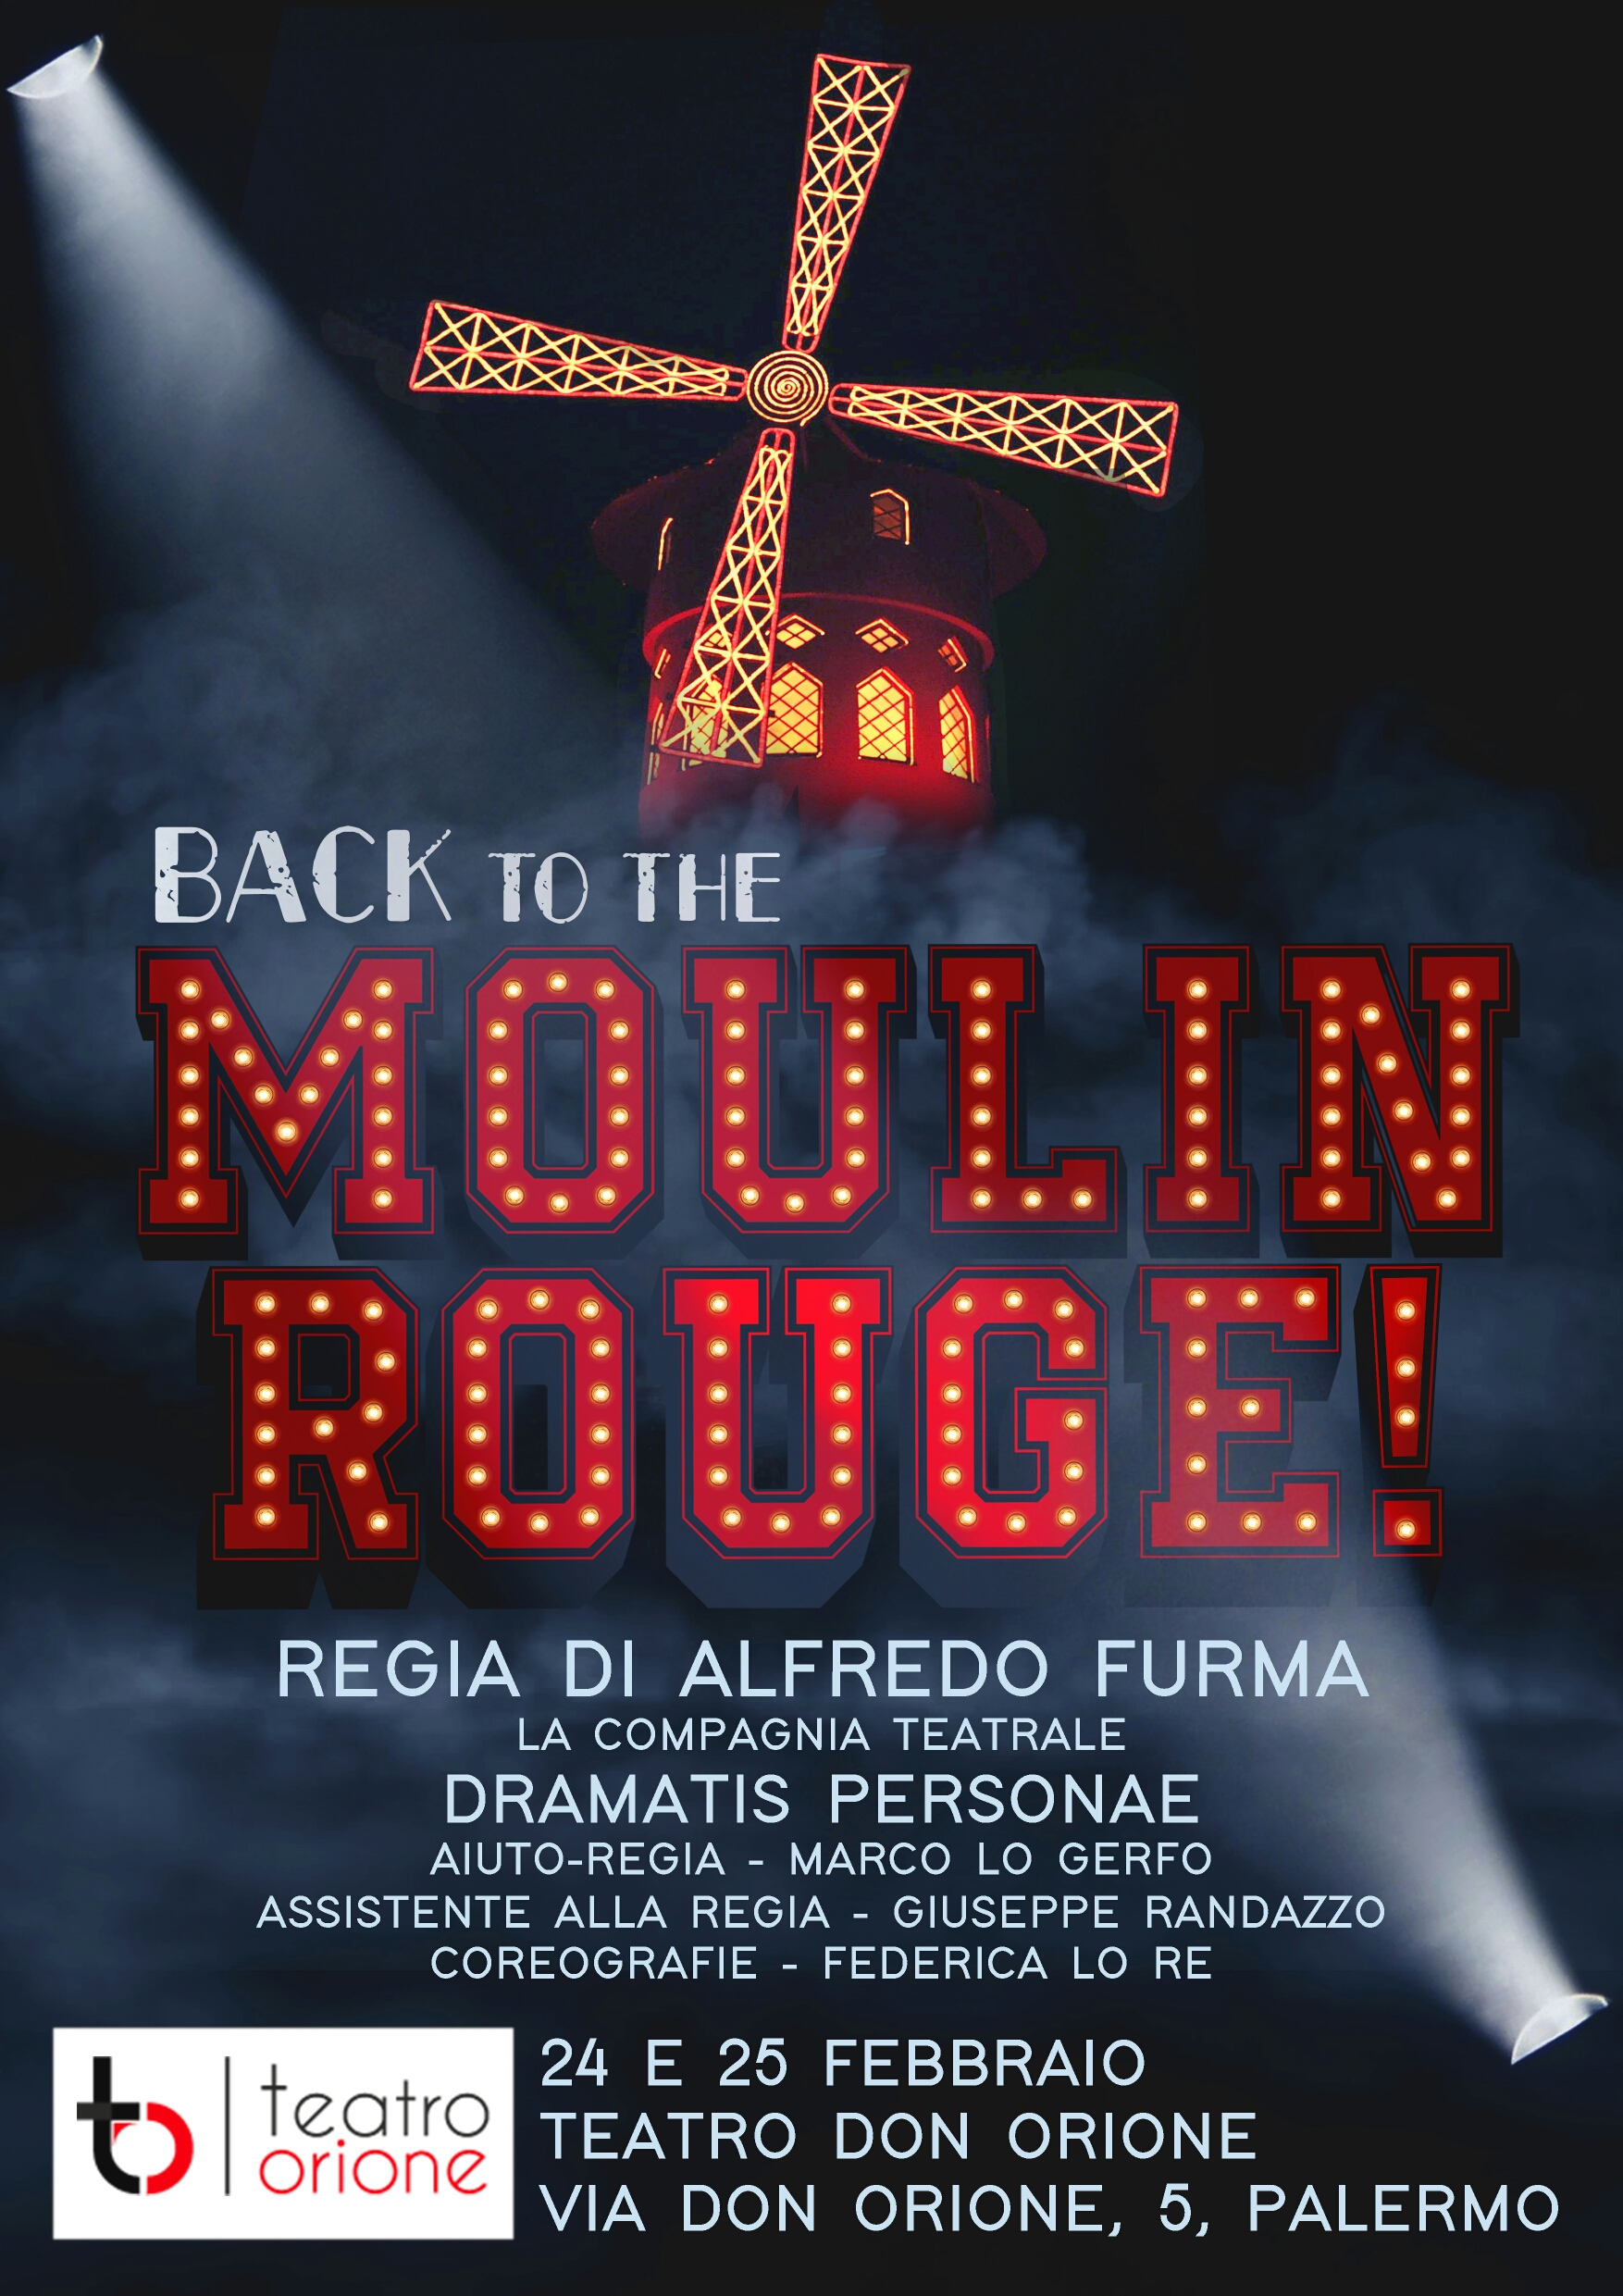 Script Moulin Rouge Pdf